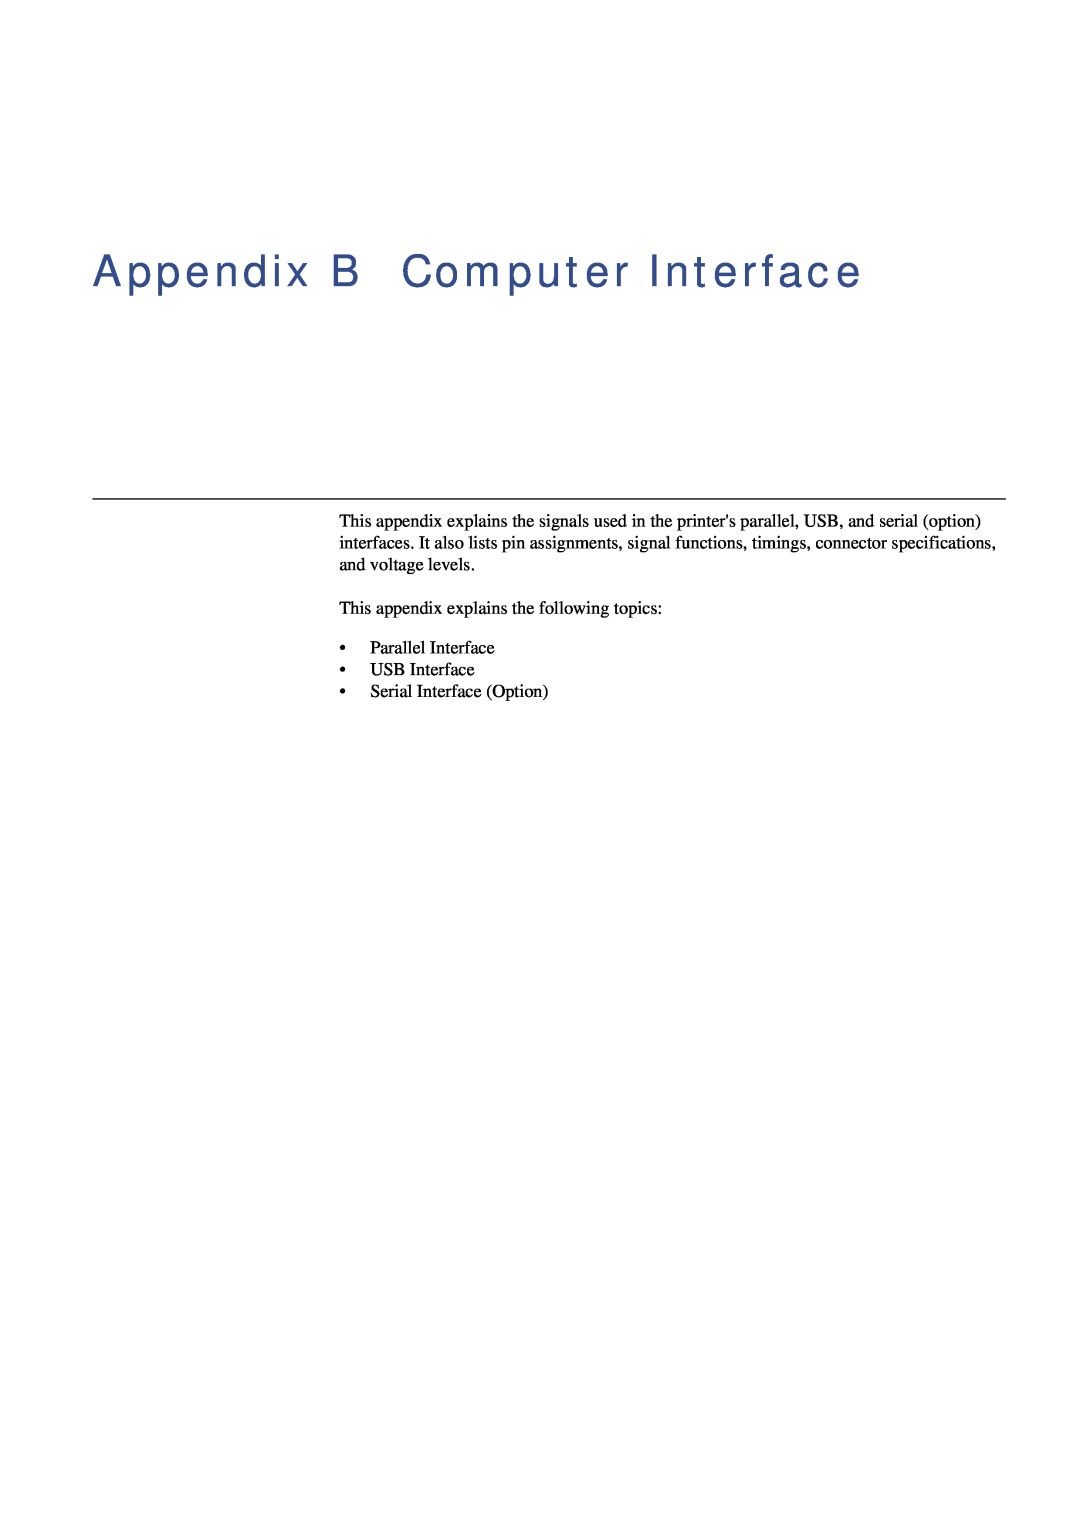 Xerox FS-C8008DN, FS-C8008N Appendix B Computer Interface, This appendix explains the following topics Parallel Interface 